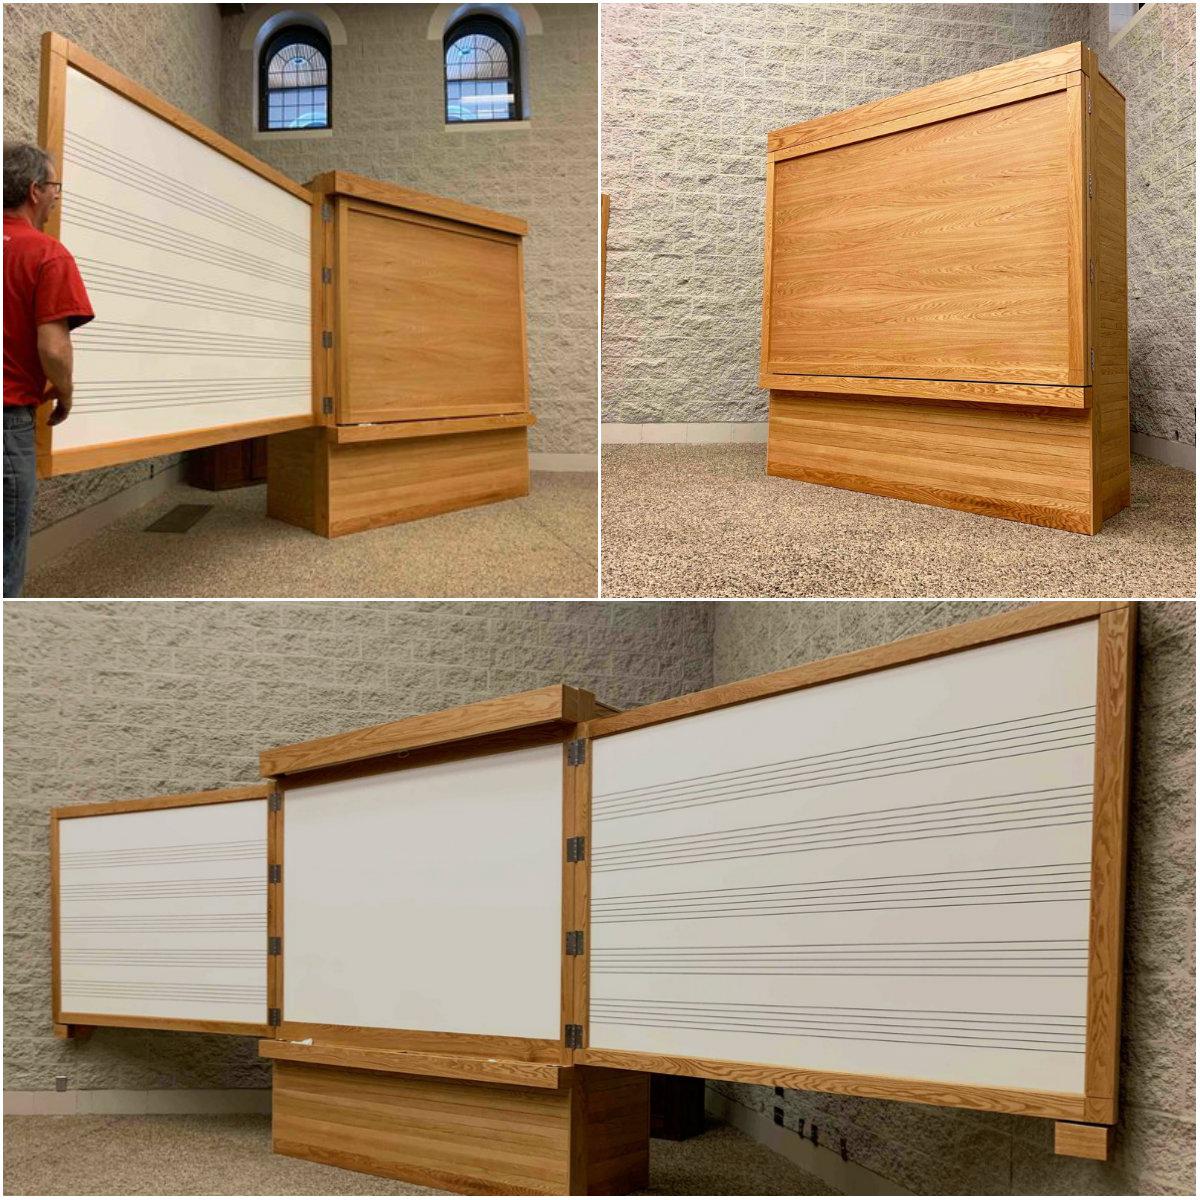 whiteboard cabinet